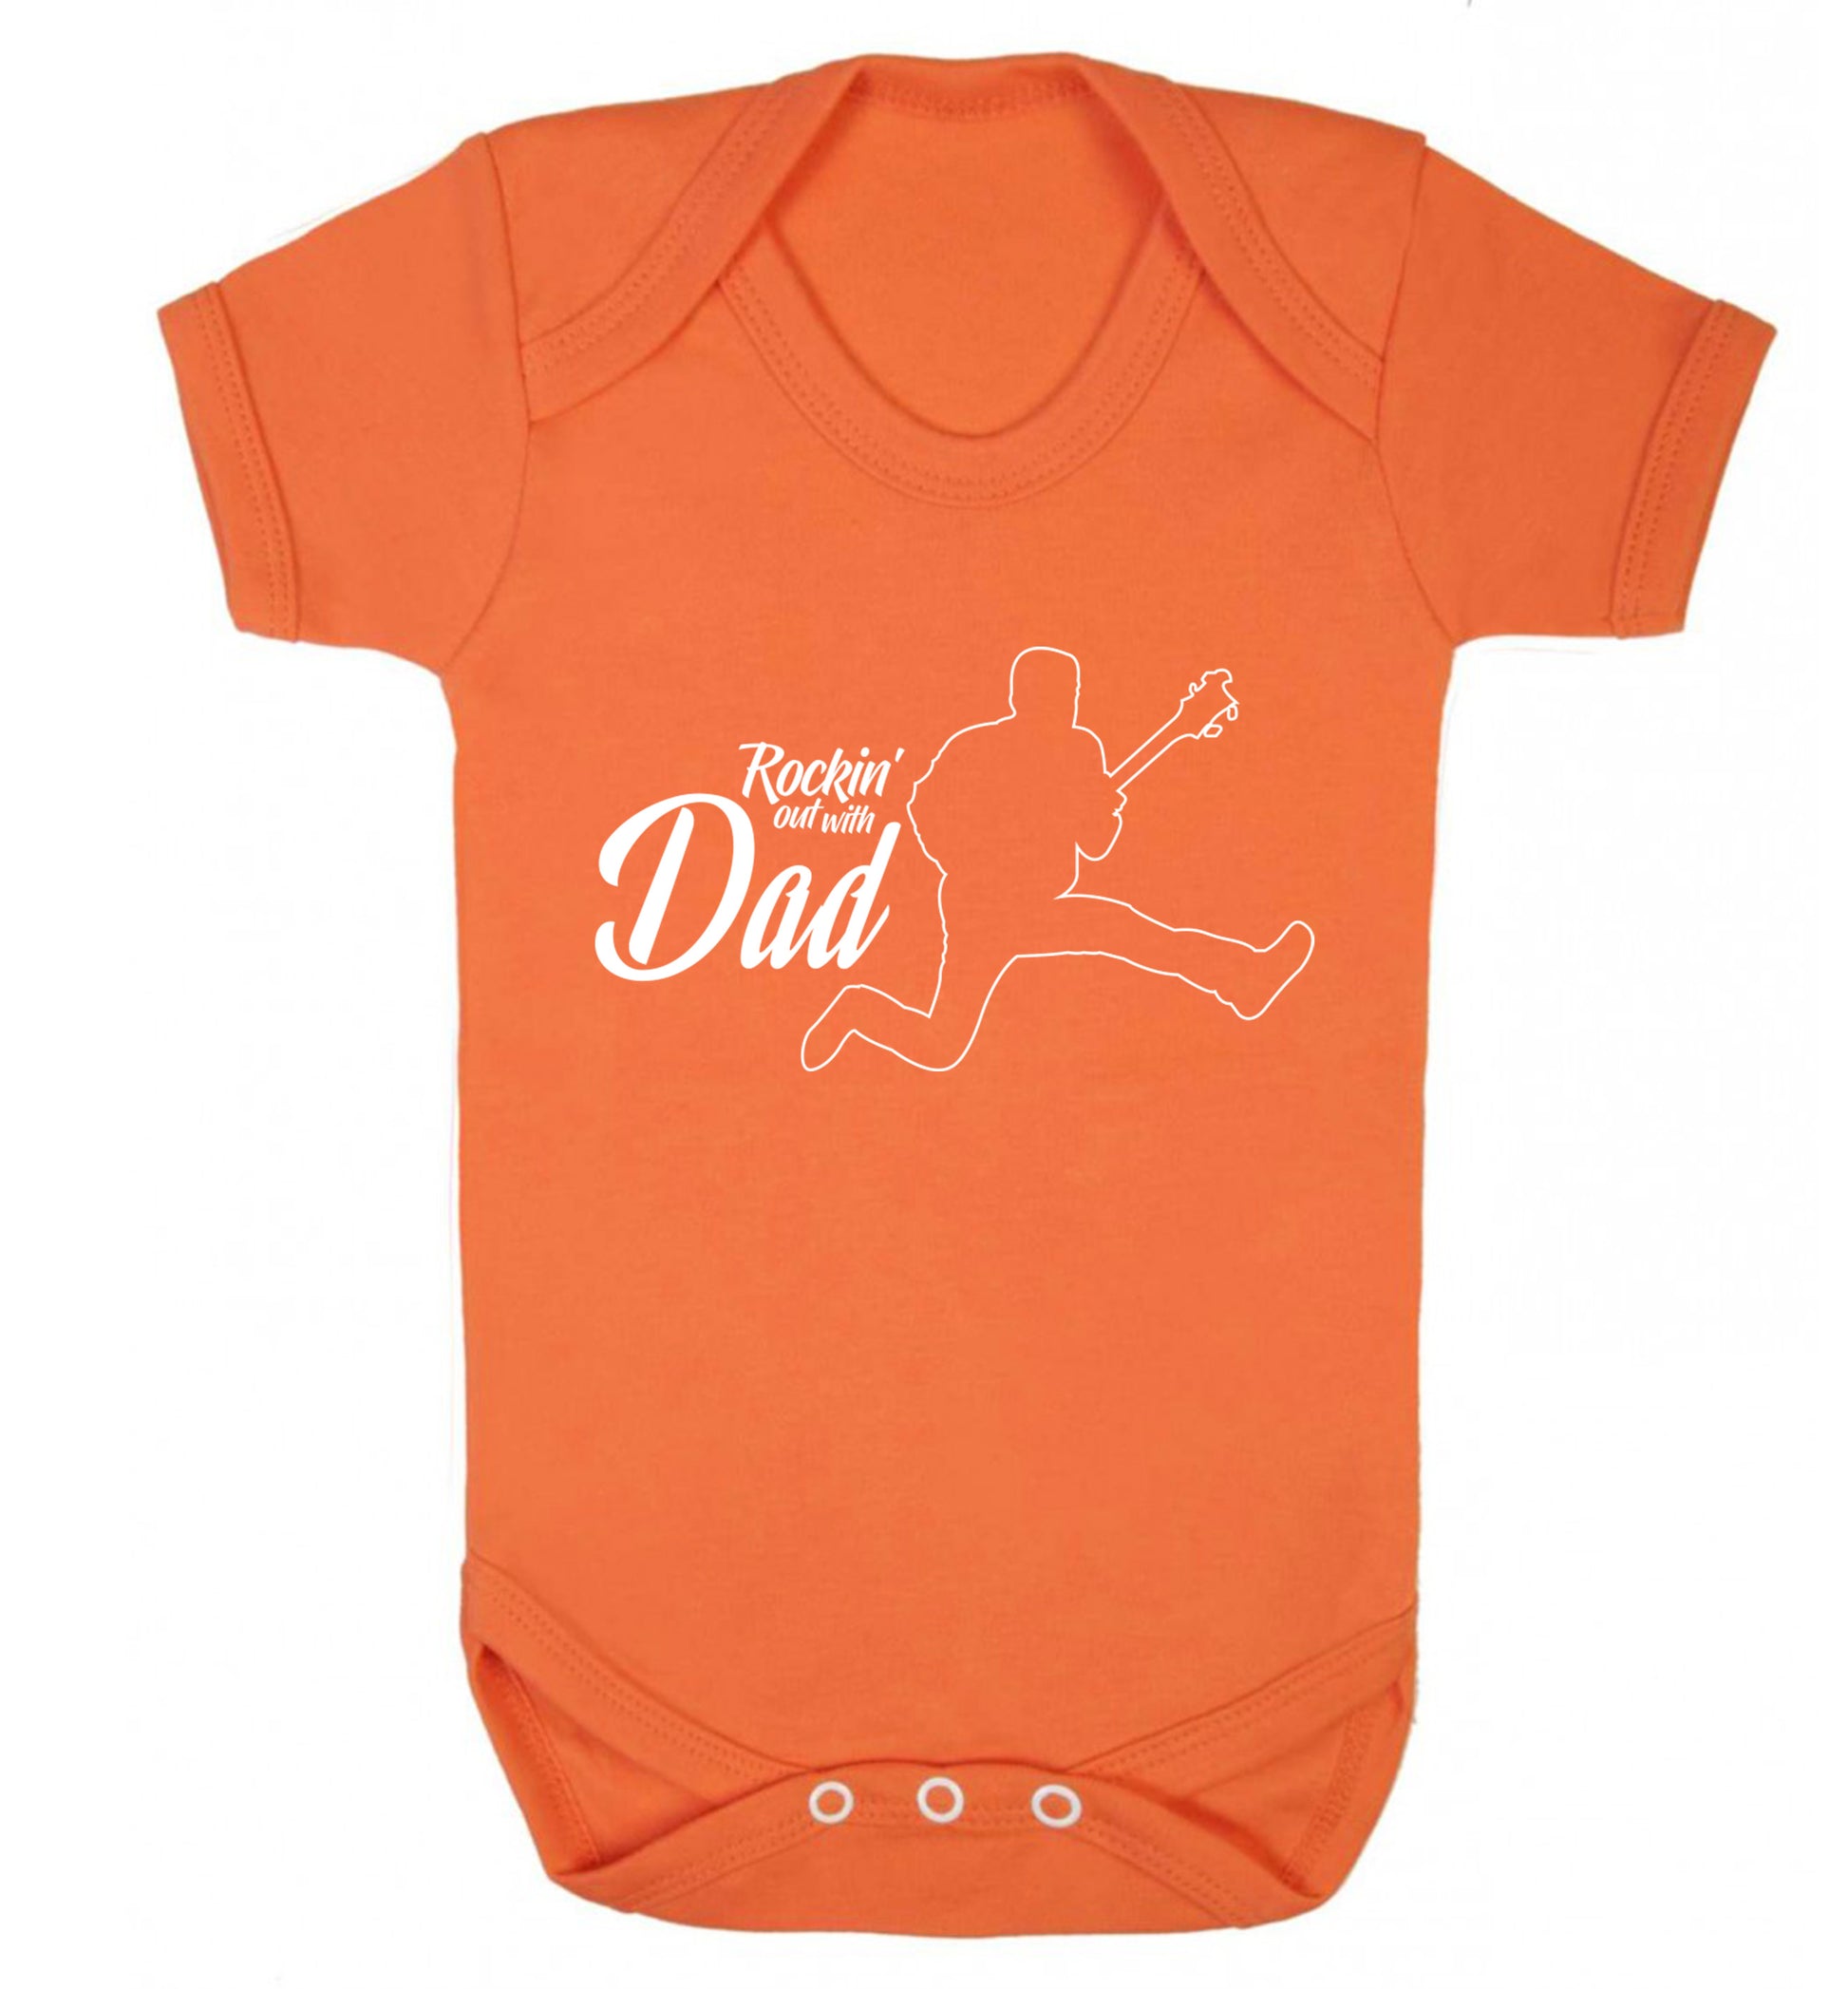 Rockin out with dad Baby Vest orange 18-24 months